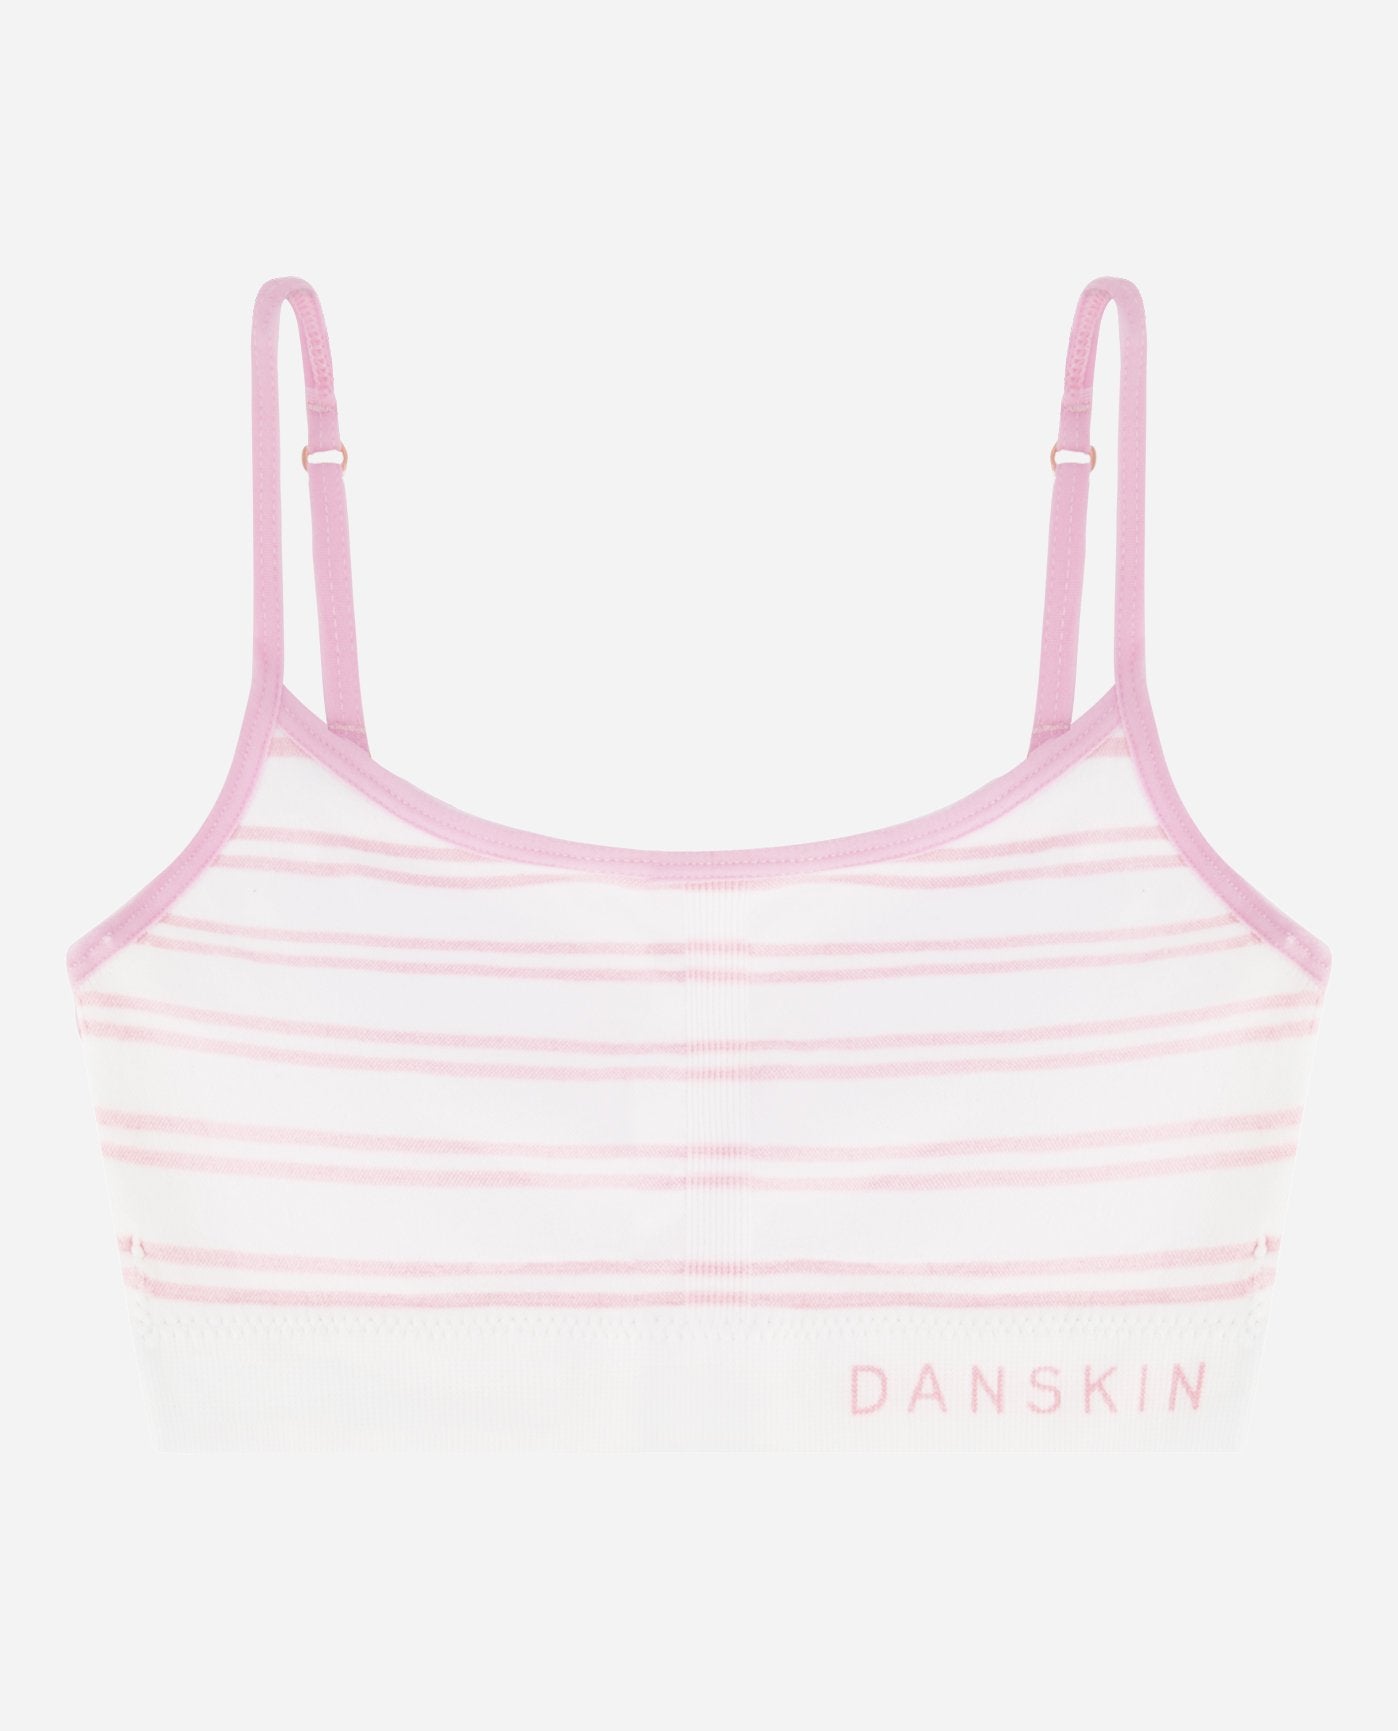 Danskin Women's 2-Pack Seamless Sports Bra Size S?M, Sugar Plum